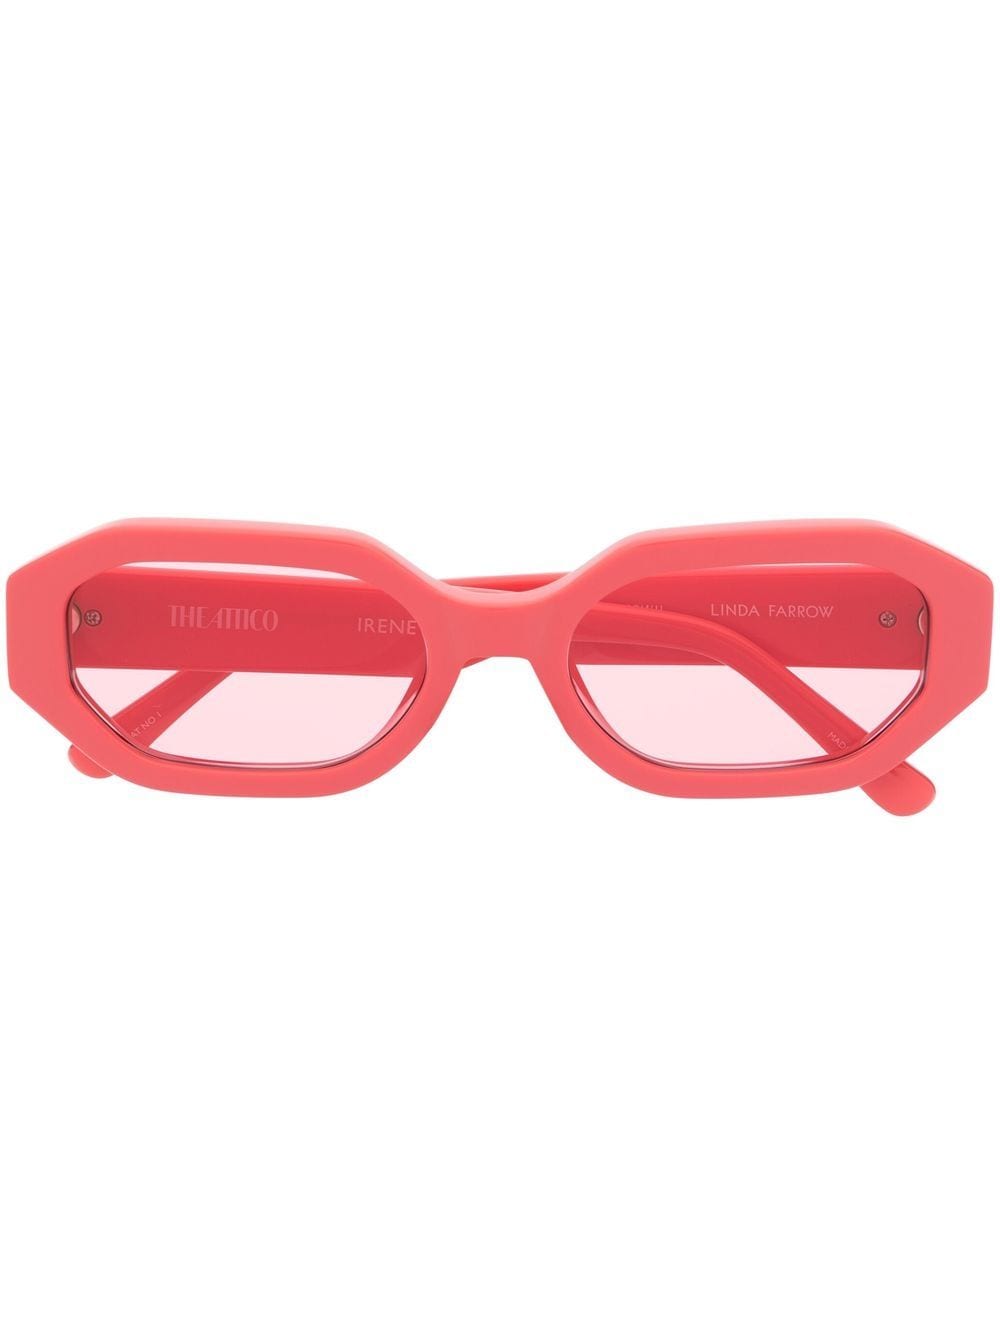 Linda Farrow x The Attico Irene oval-frame sunglasses - Pink von Linda Farrow